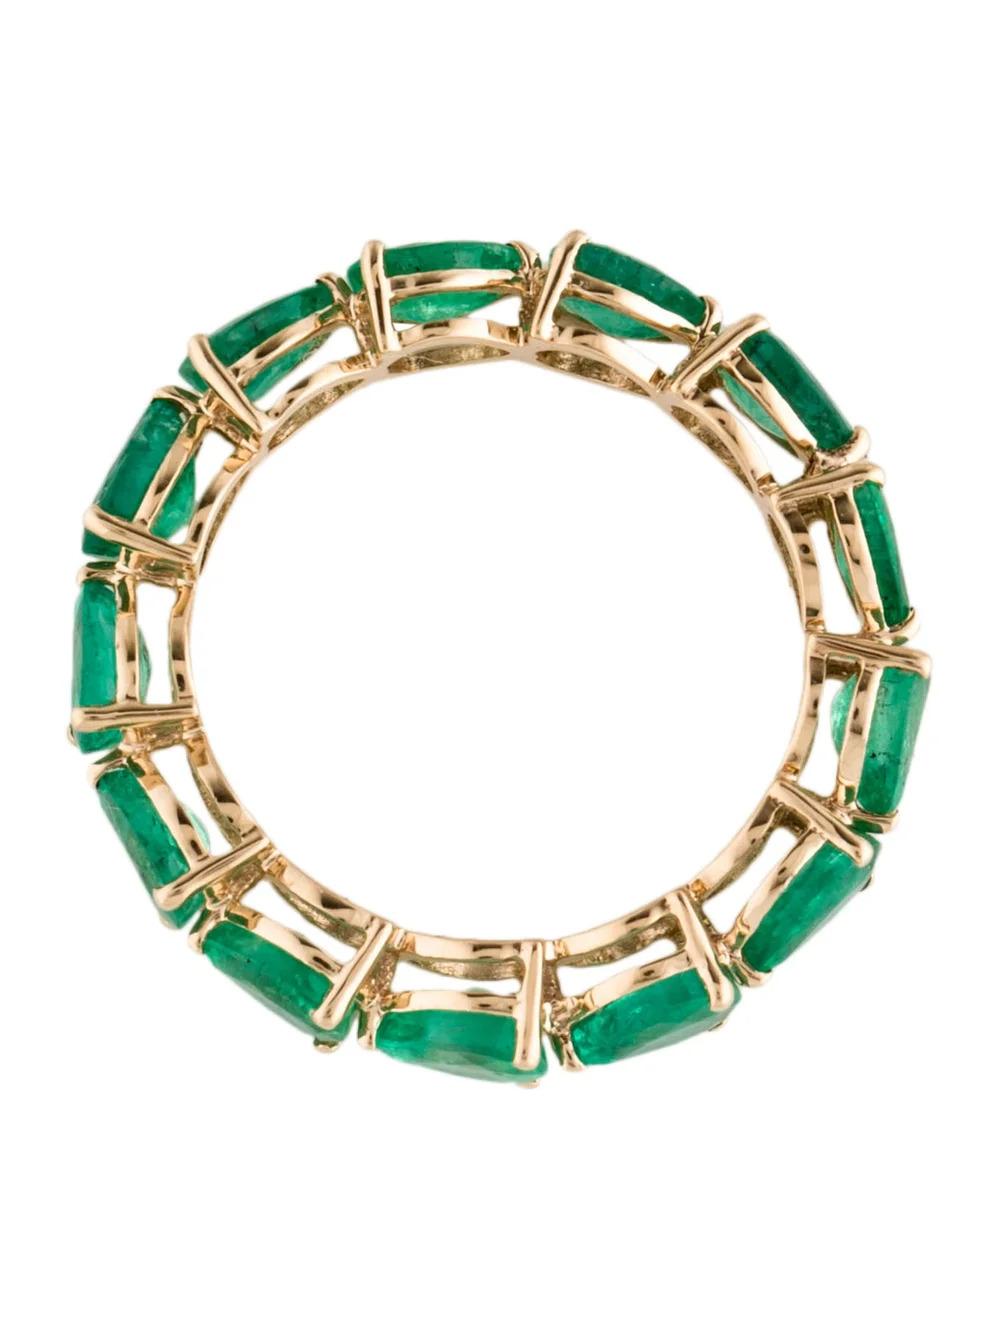 Women's 14K 3.55ctw Emerald Eternity Band Ring Size 7 - Green Gemstone Fine Jewelry For Sale